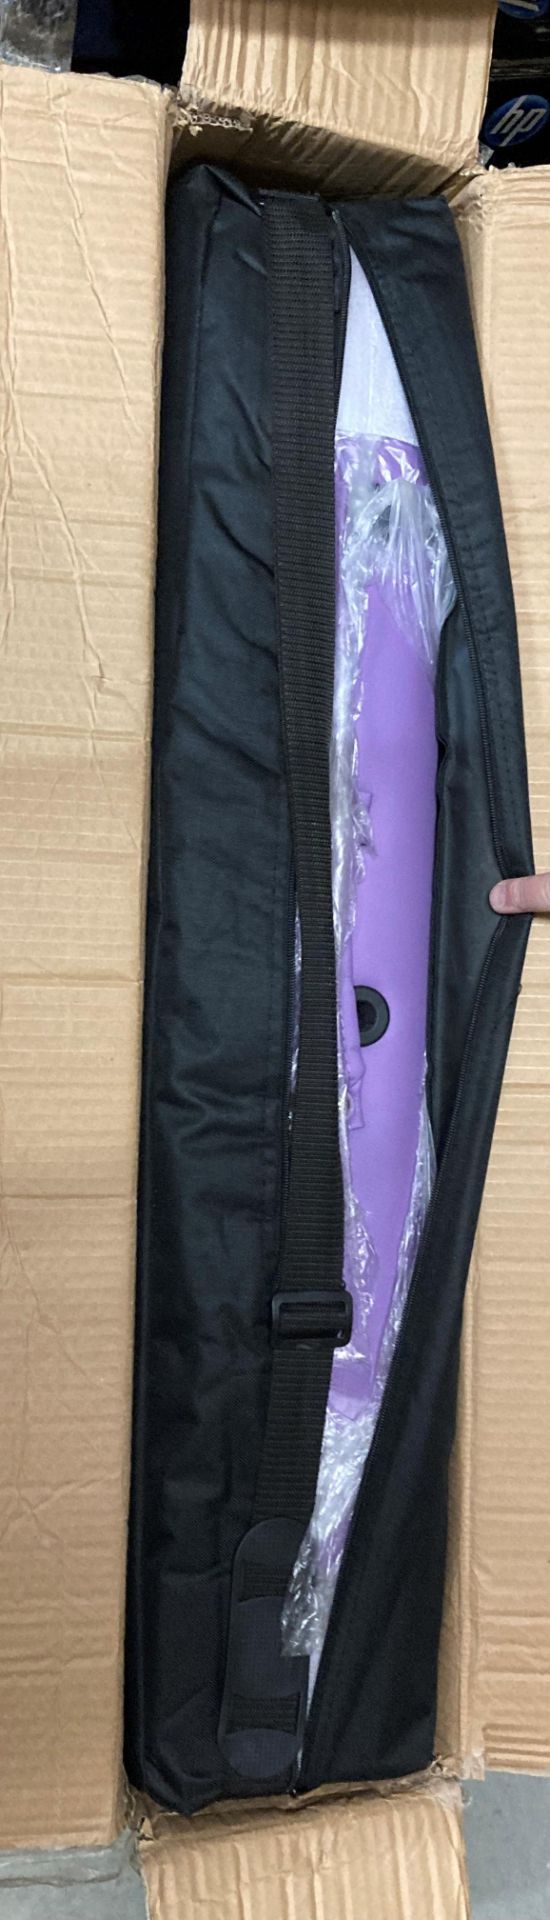 Homcom aluminium framed folding massage table in purple (boxed - appears to be new) (saleroom